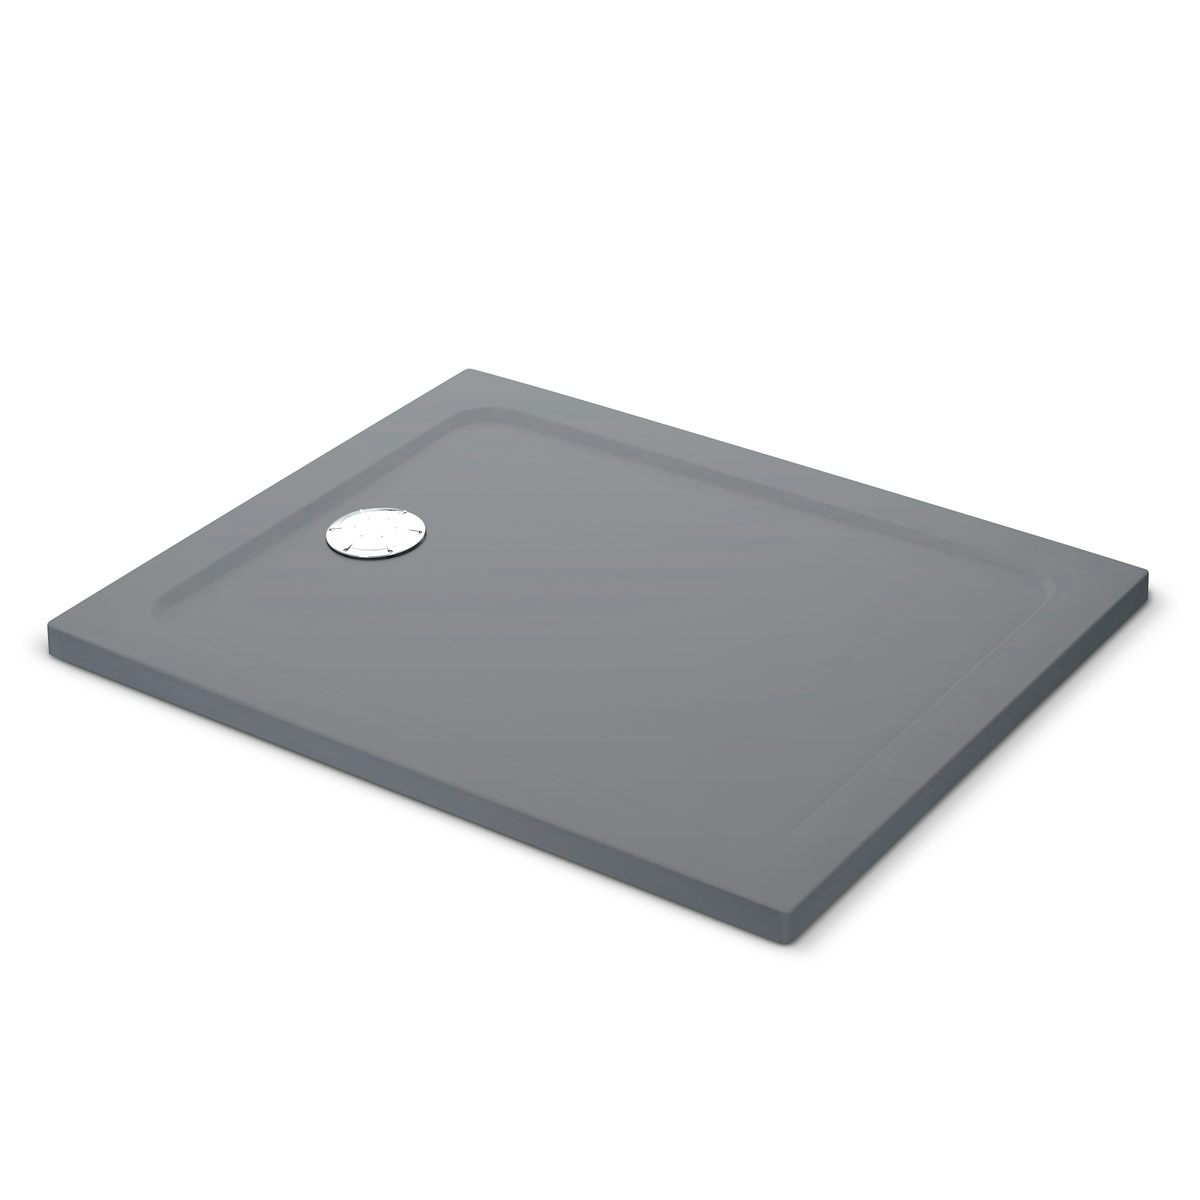 Mira Flight Safe low level anti-slip rectangular shower tray 1200 x 800 in Anthracite grey